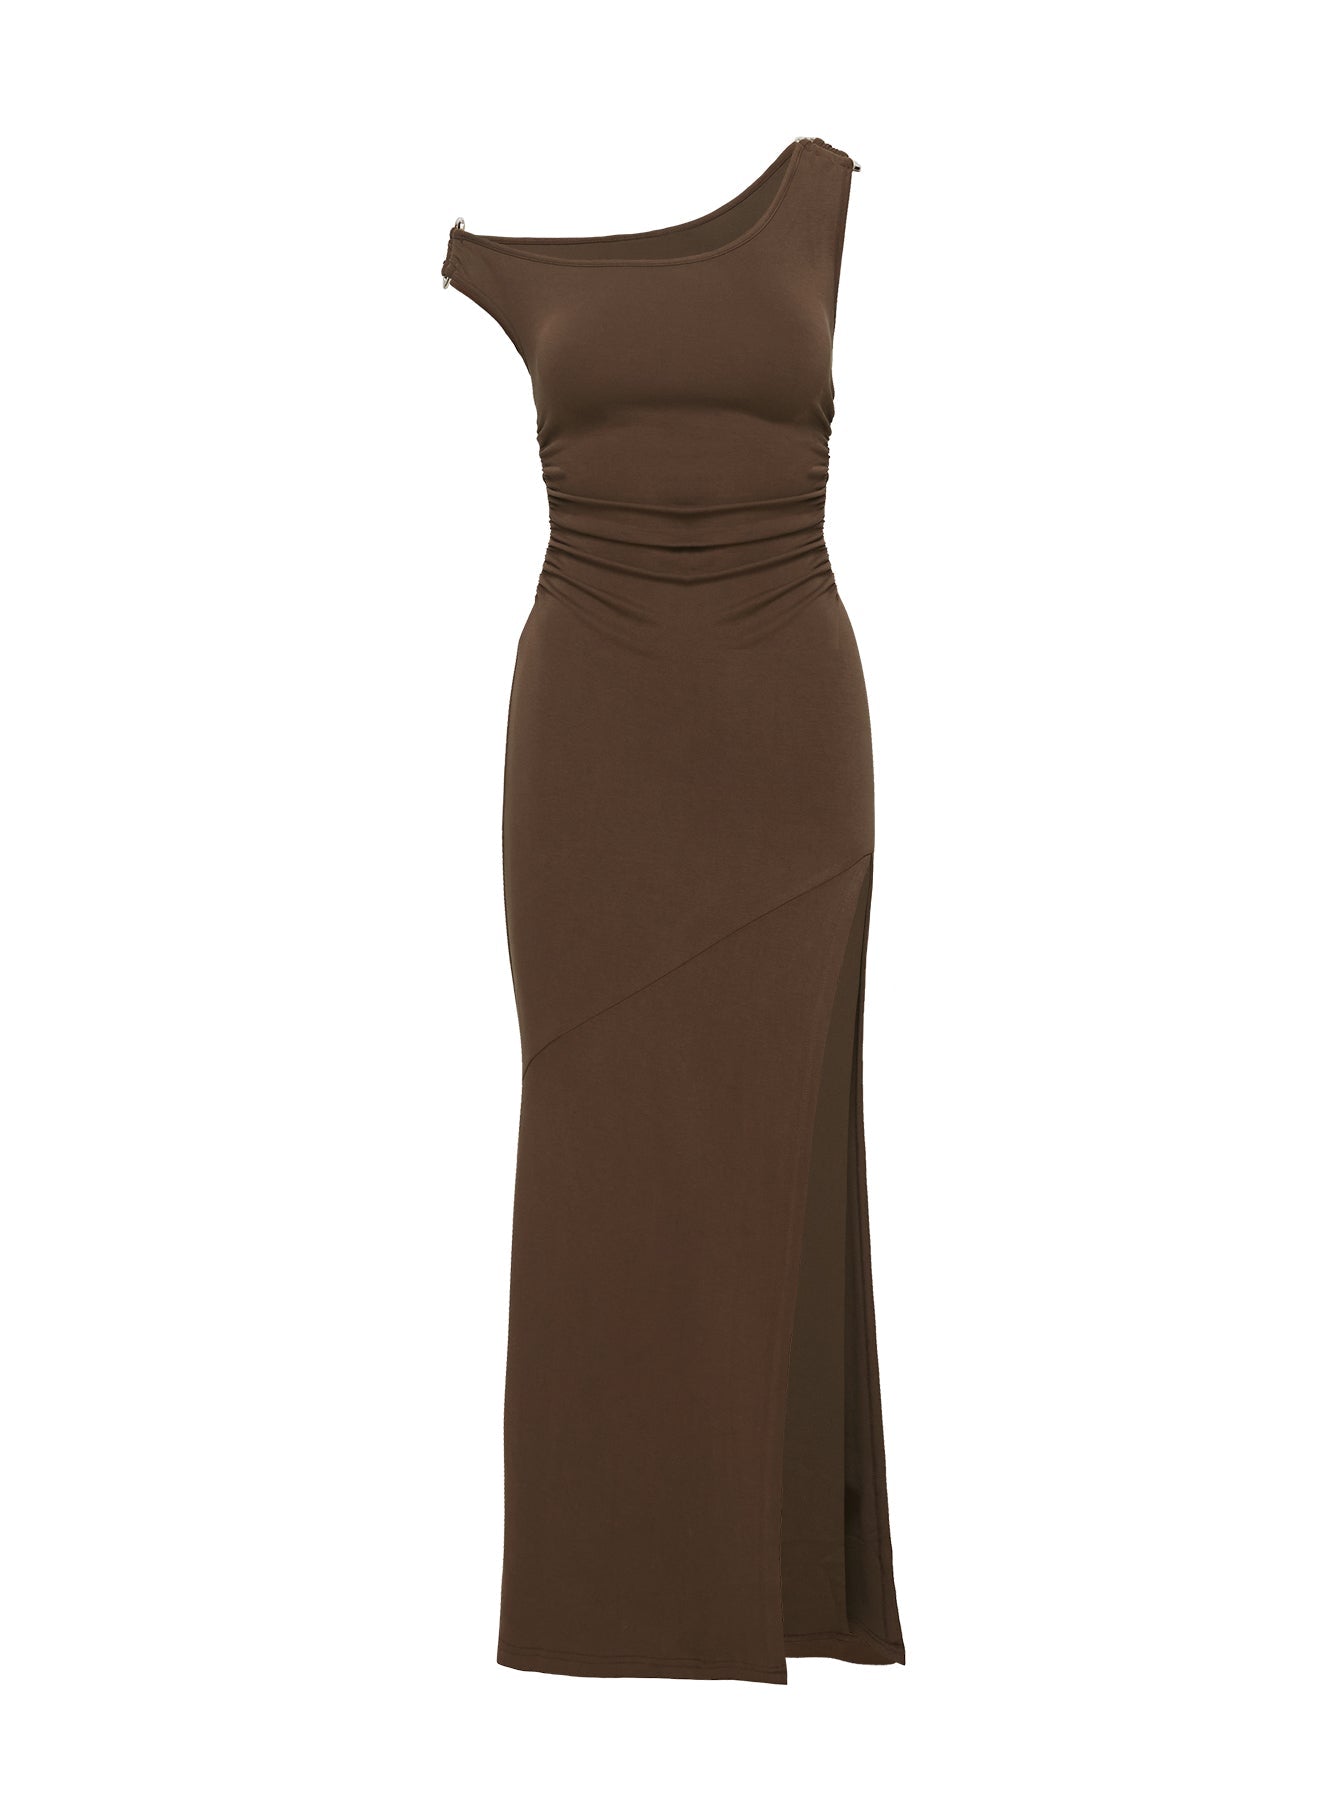 Shop Formal Dress - Rios One Shoulder Maxi Dress Brown Curve third image